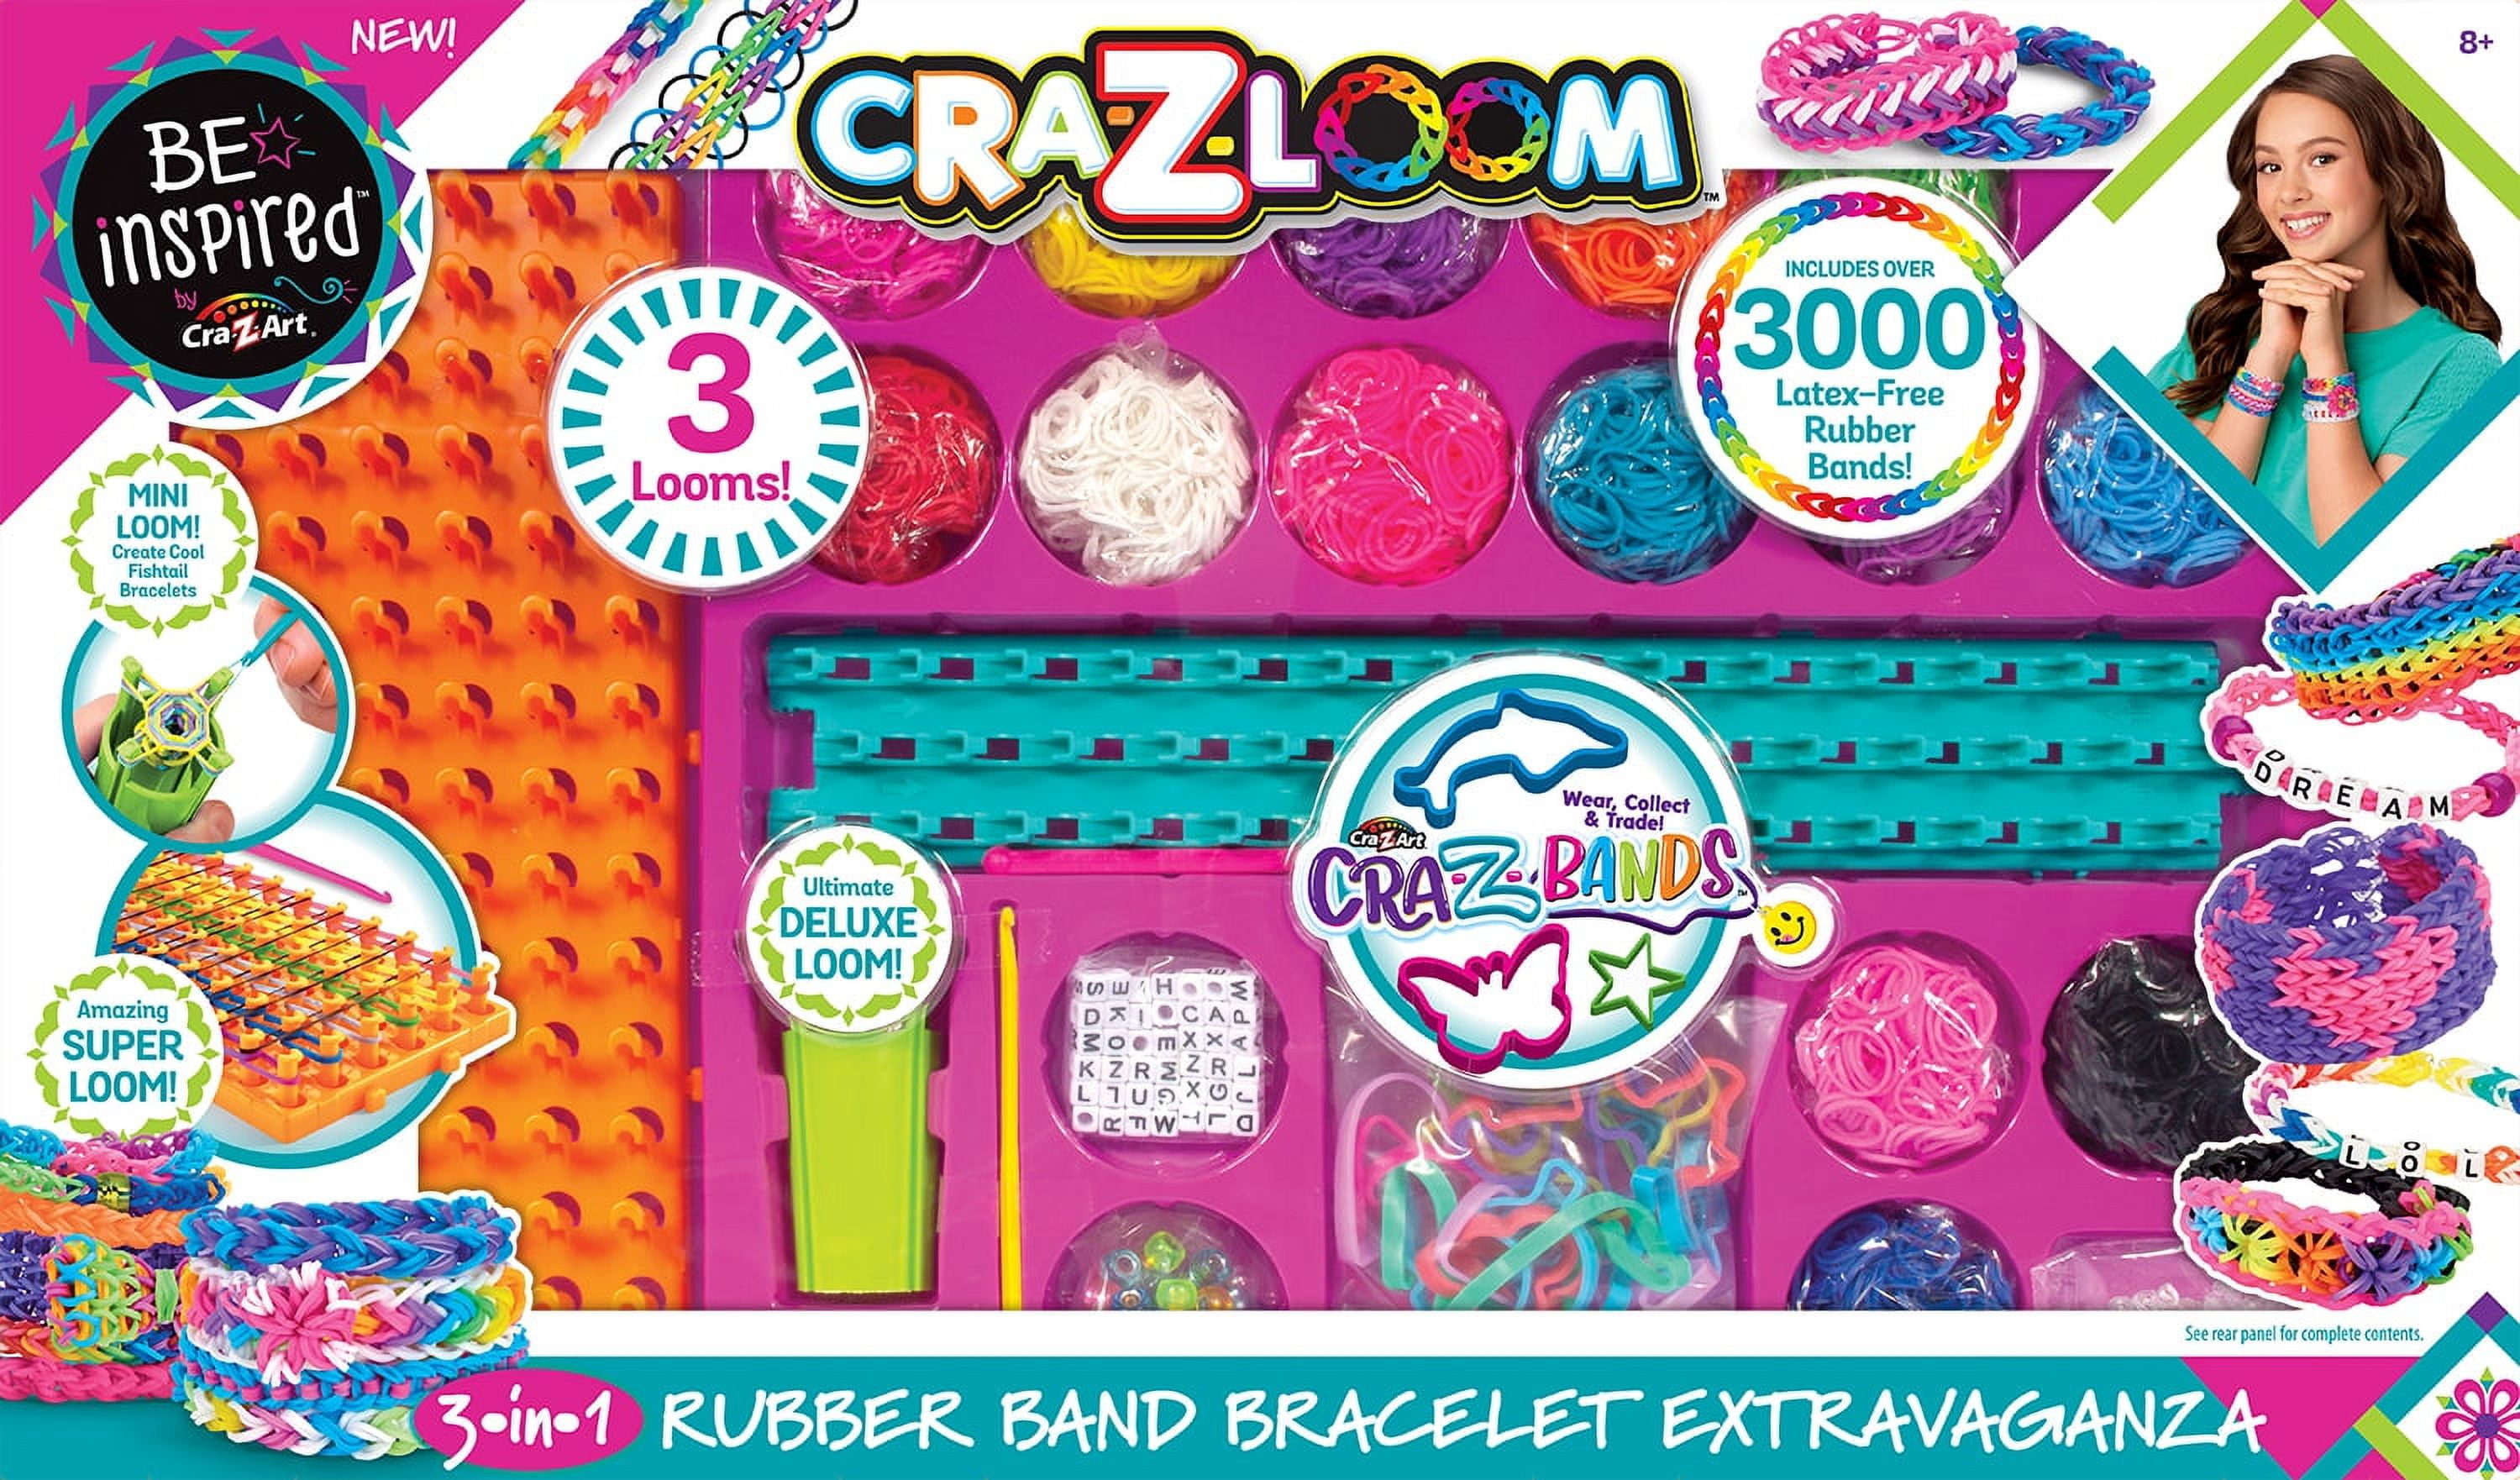 Cra-Z-Art Cra-Z-Loom Bracelet Maker Kit NIDGBBRW76